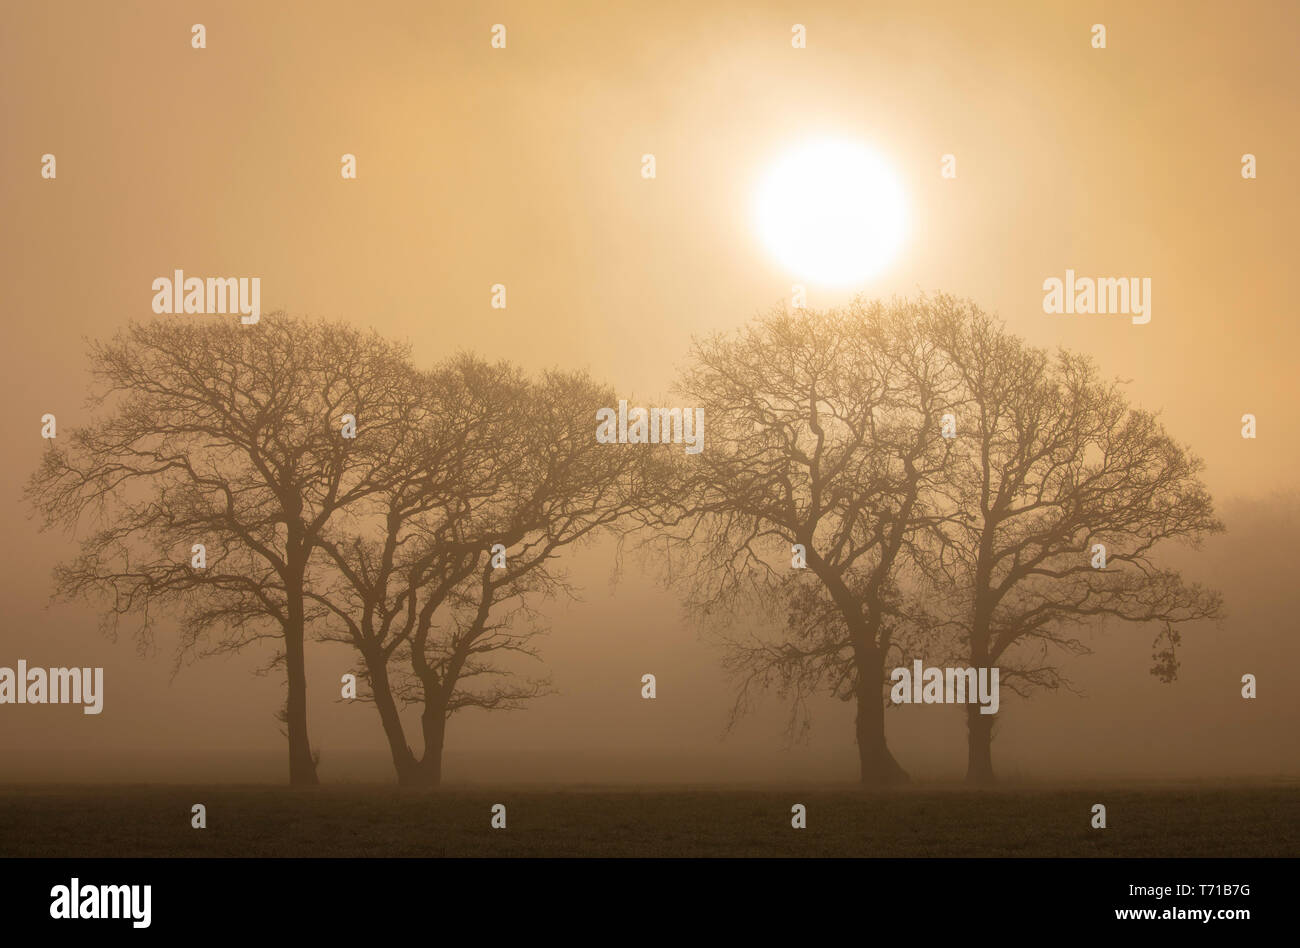 tree silhouettes with sun burning through mist Stock Photo